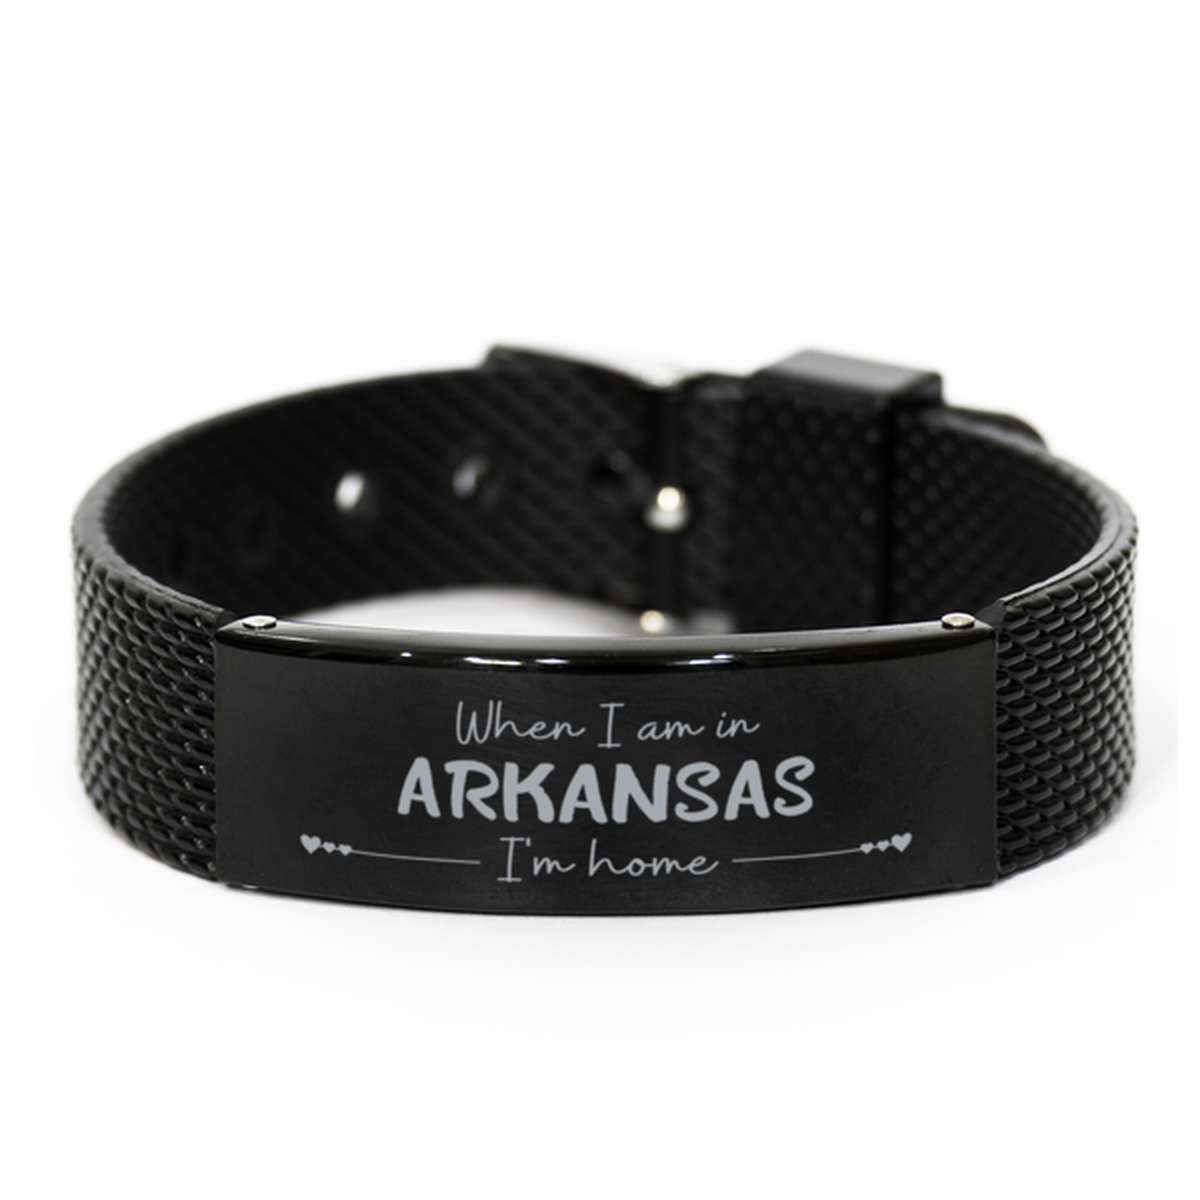 When I am in Arkansas I'm home Black Shark Mesh Bracelet, Cheap Gifts For Arkansas, State Arkansas Birthday Gifts for Friends Coworker